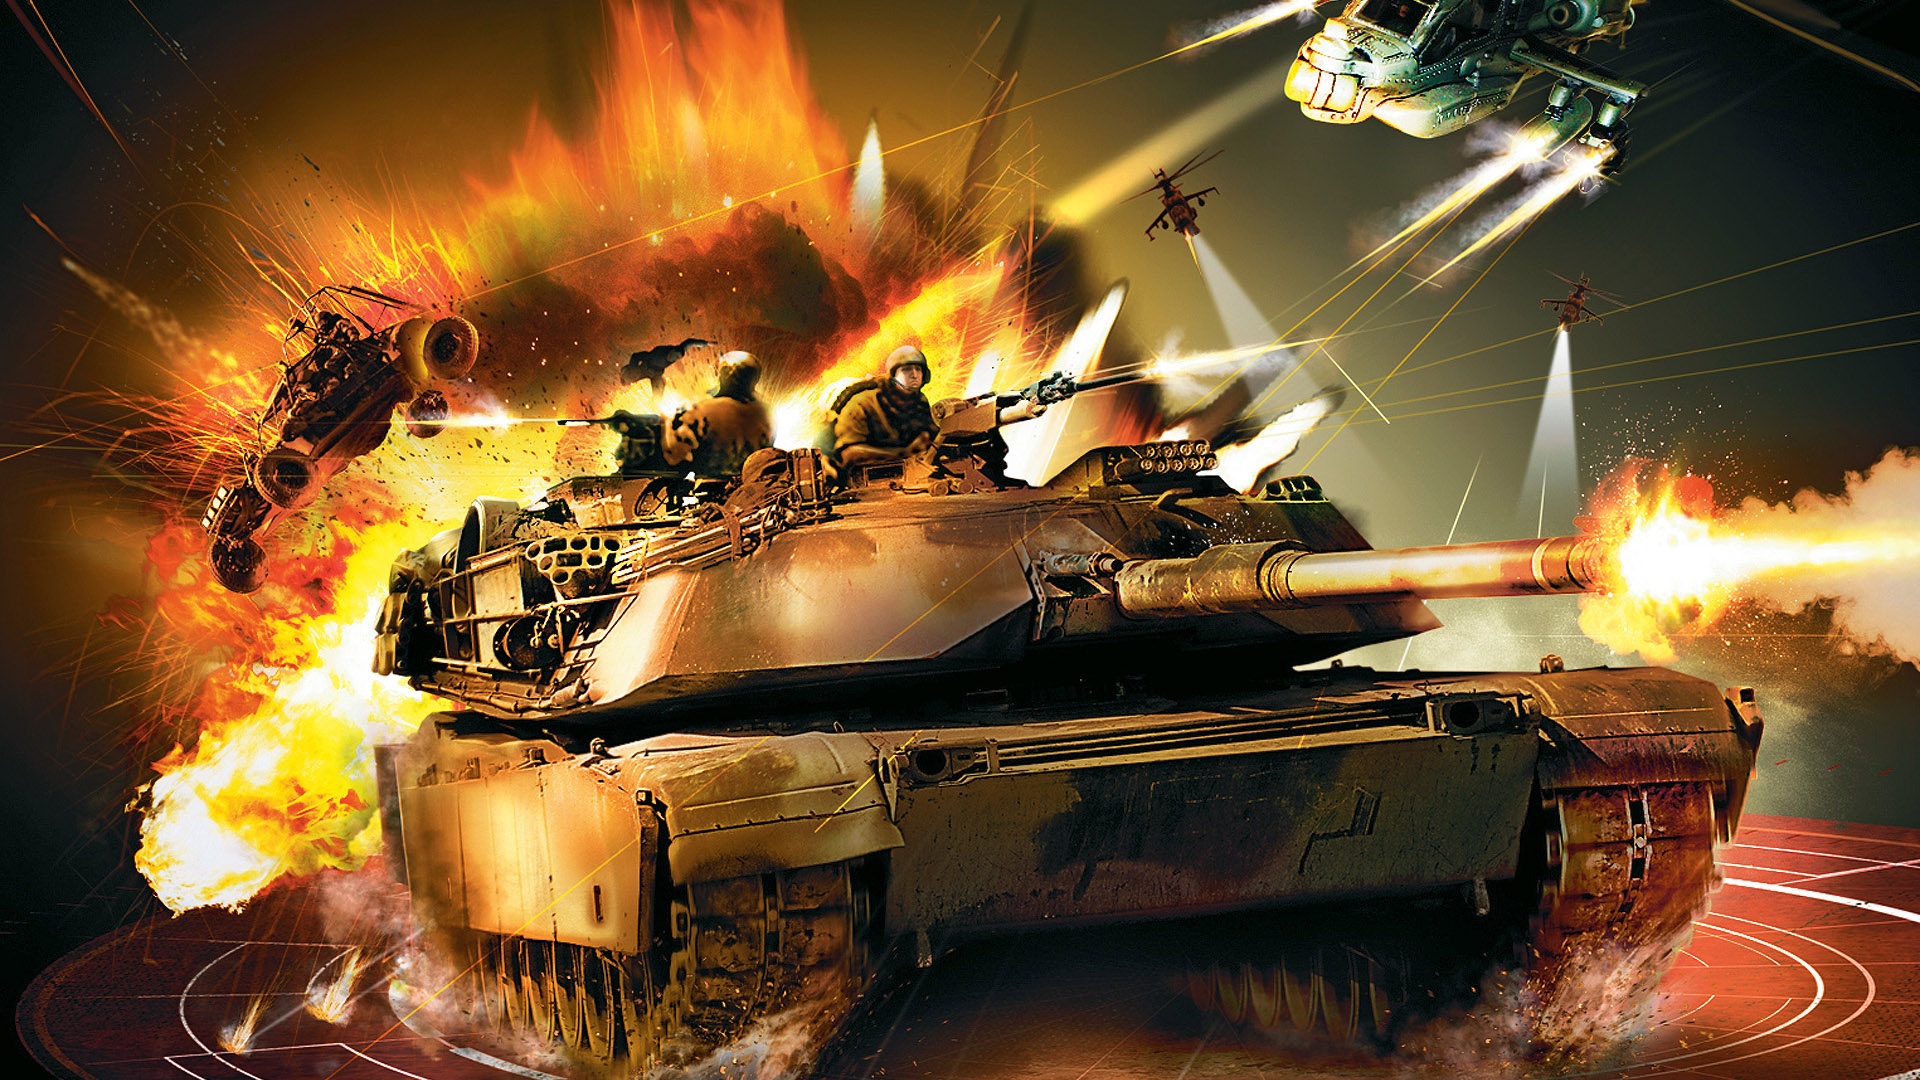 Amazing Tank Army Fire Wallpaper Desktop